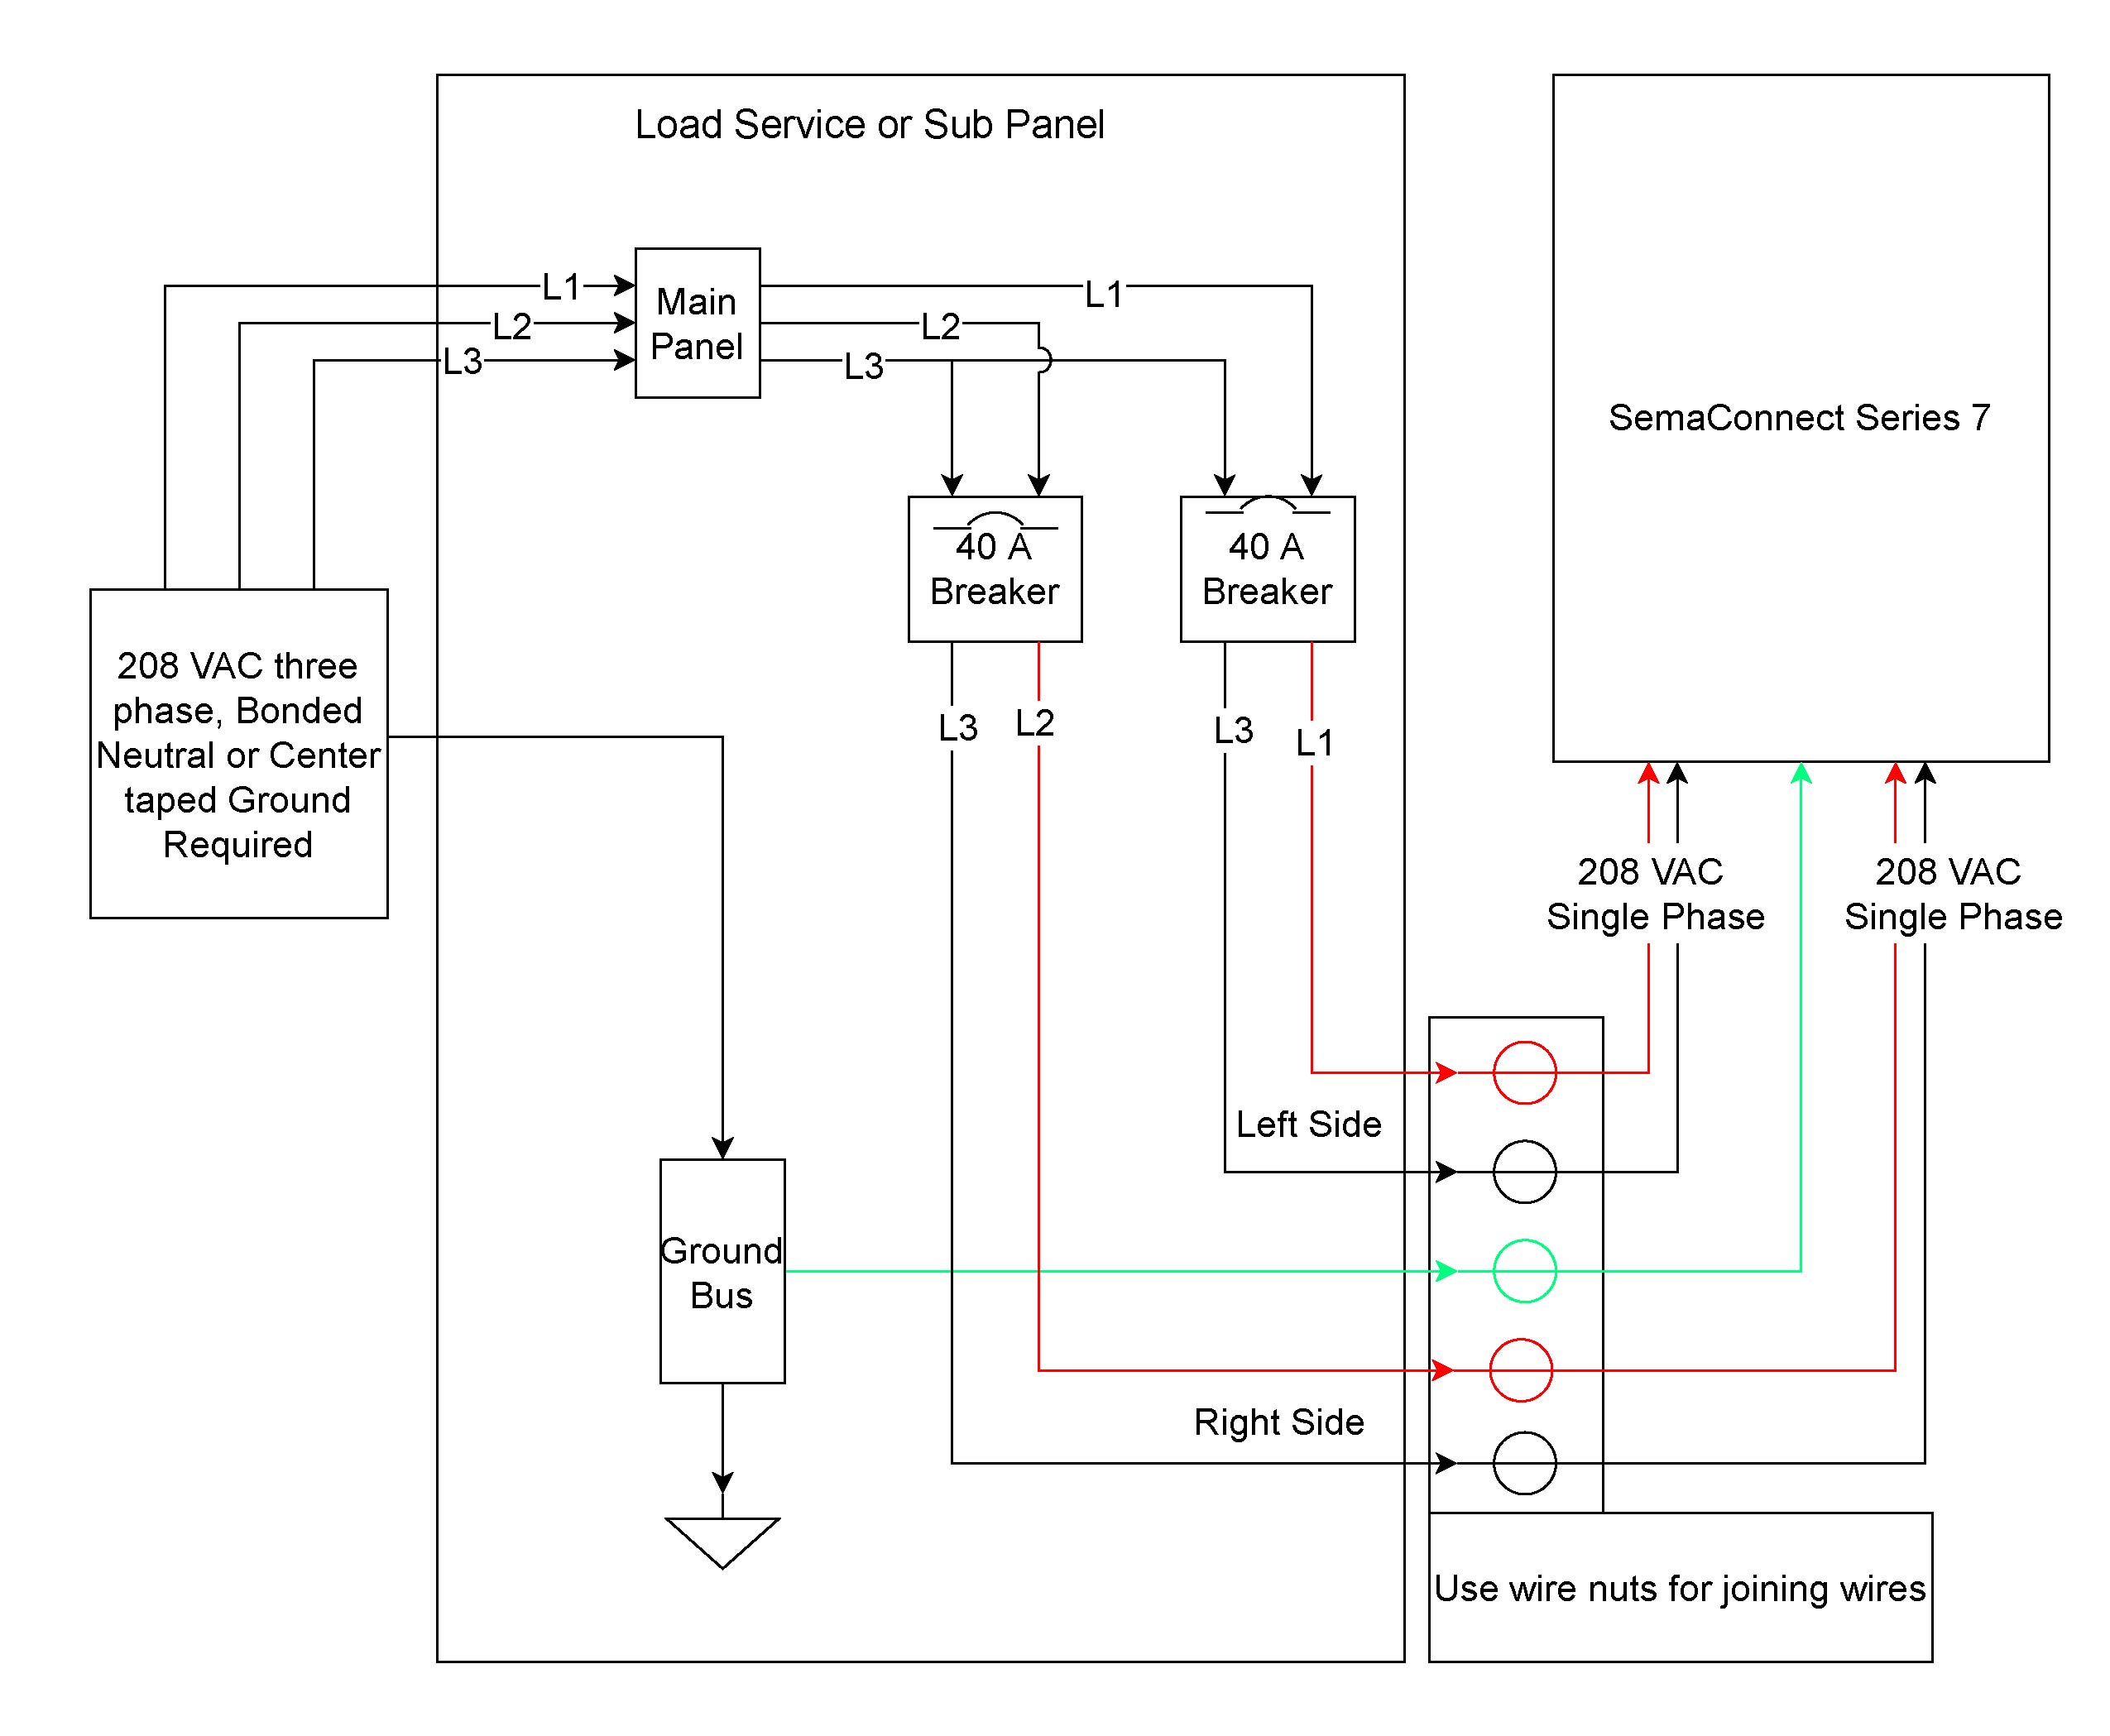 gmp075-3 wiring diagram